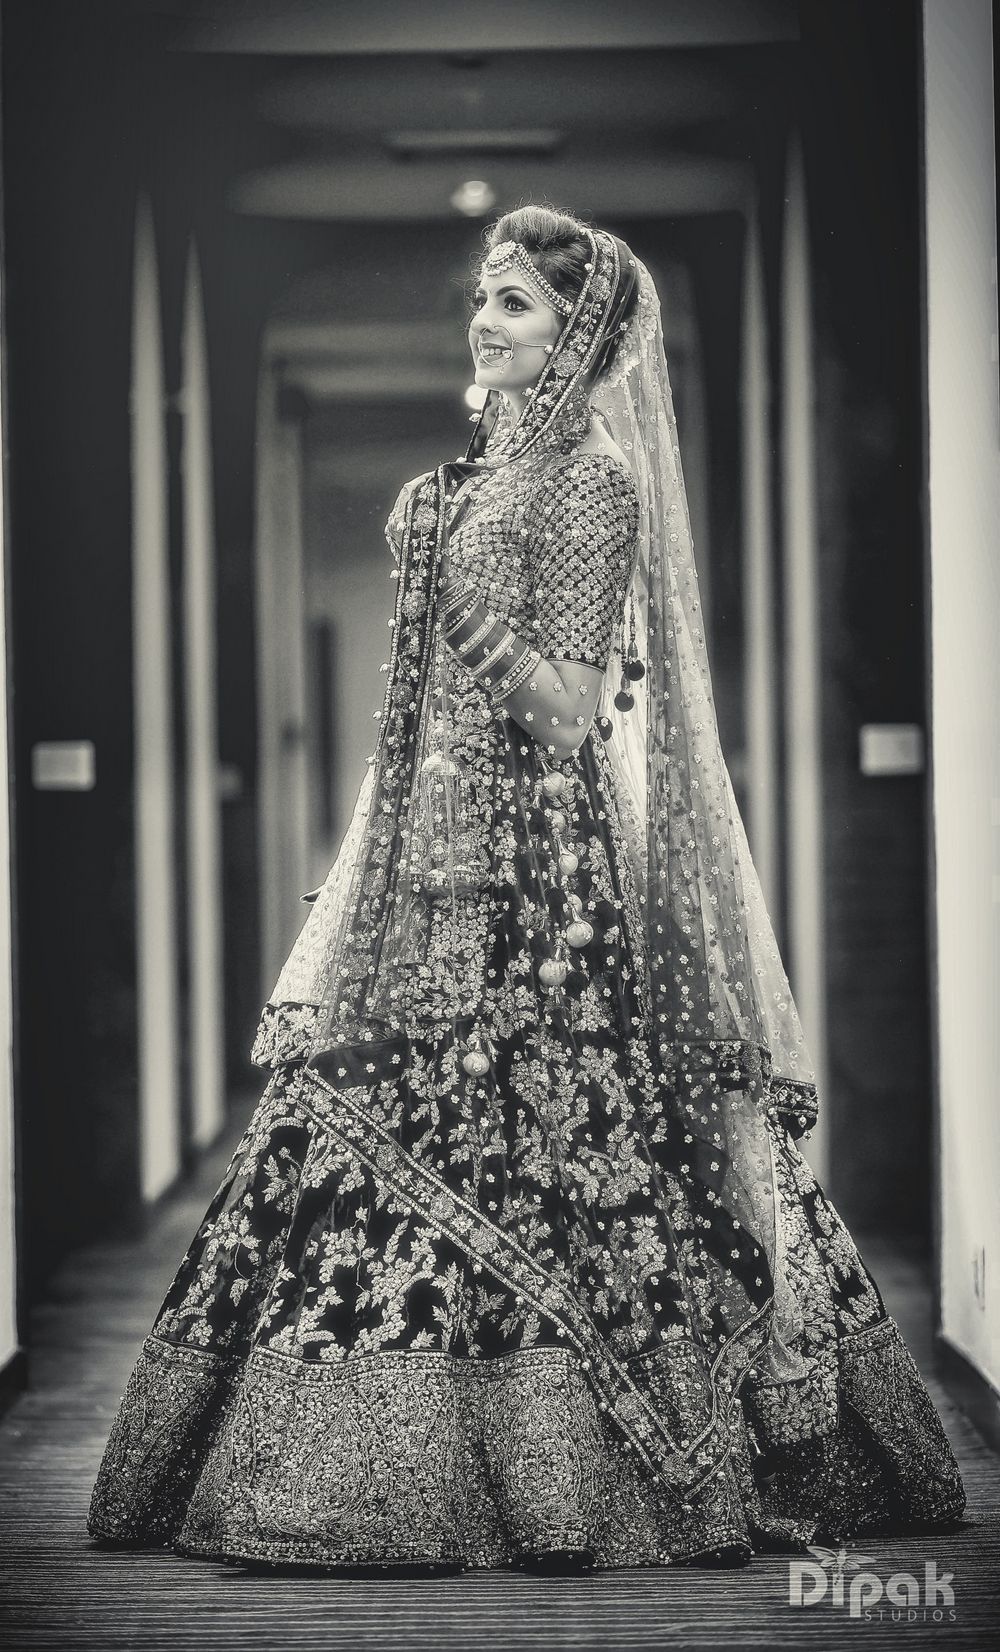 Photo of Pretty full bridal portrait in black and white